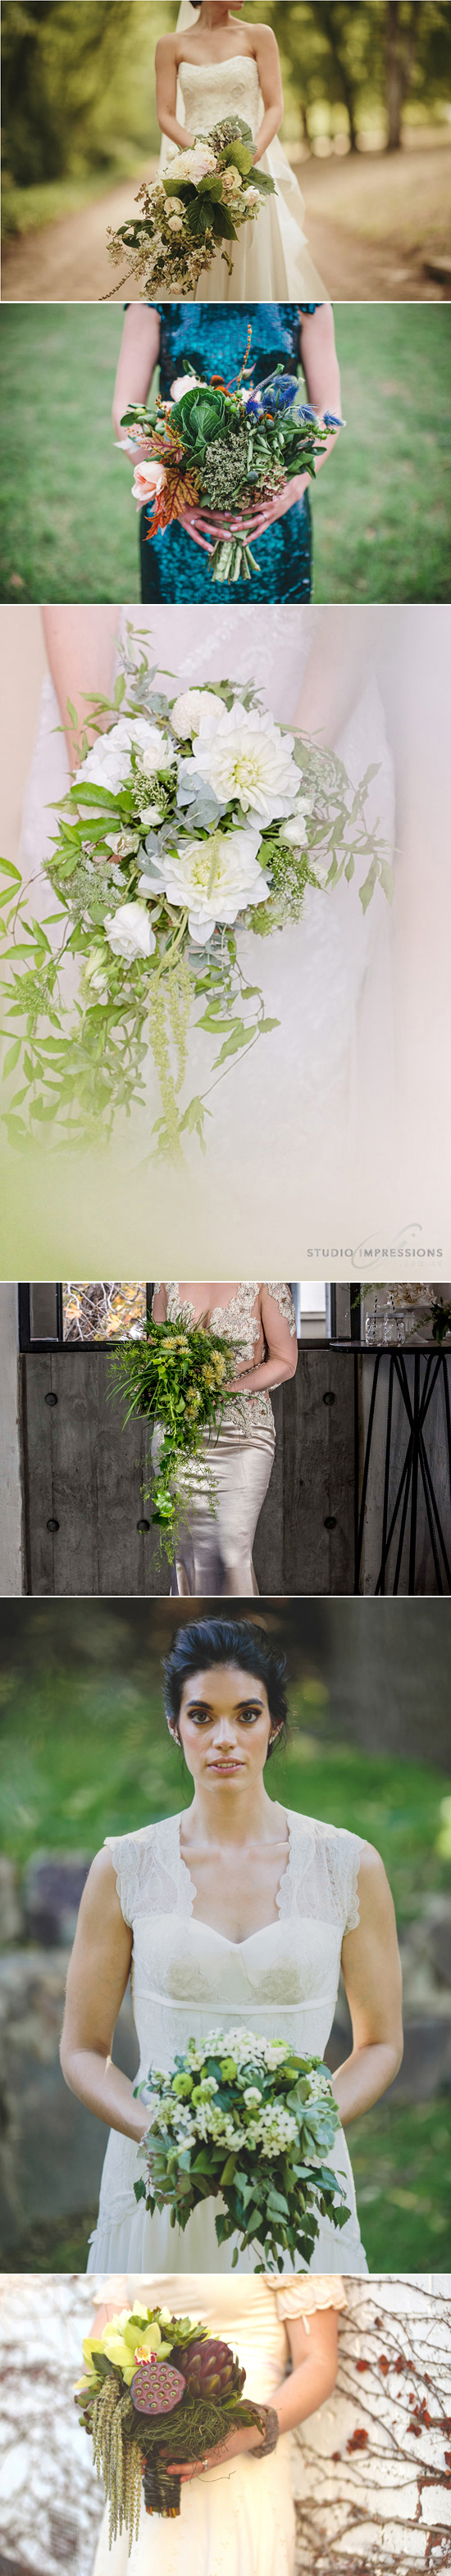 Greenery wedding bouquets